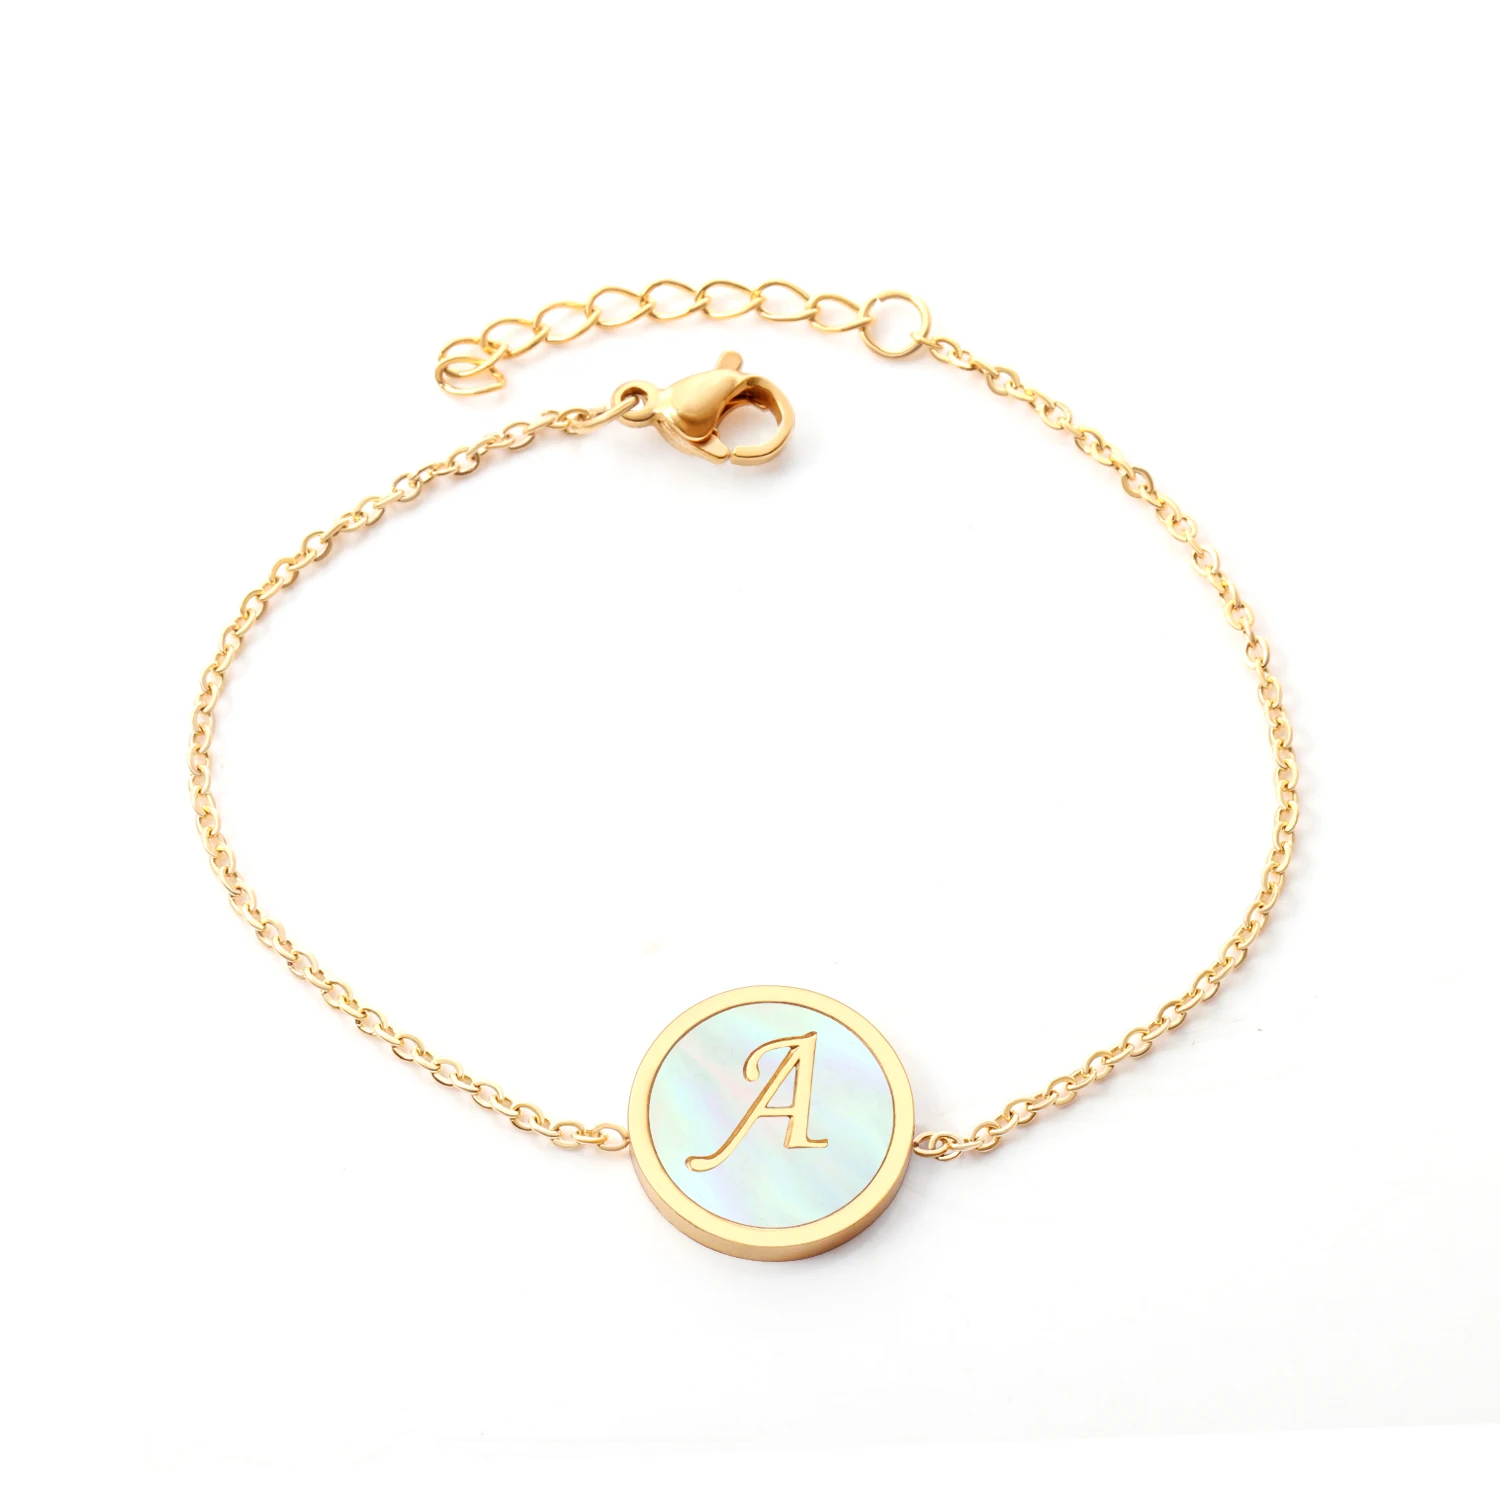 316 Stainless Steel Bangle Bracelet 18 Carat Gold  Bangles And Bracelets For Women Jewelry Link Bracelet